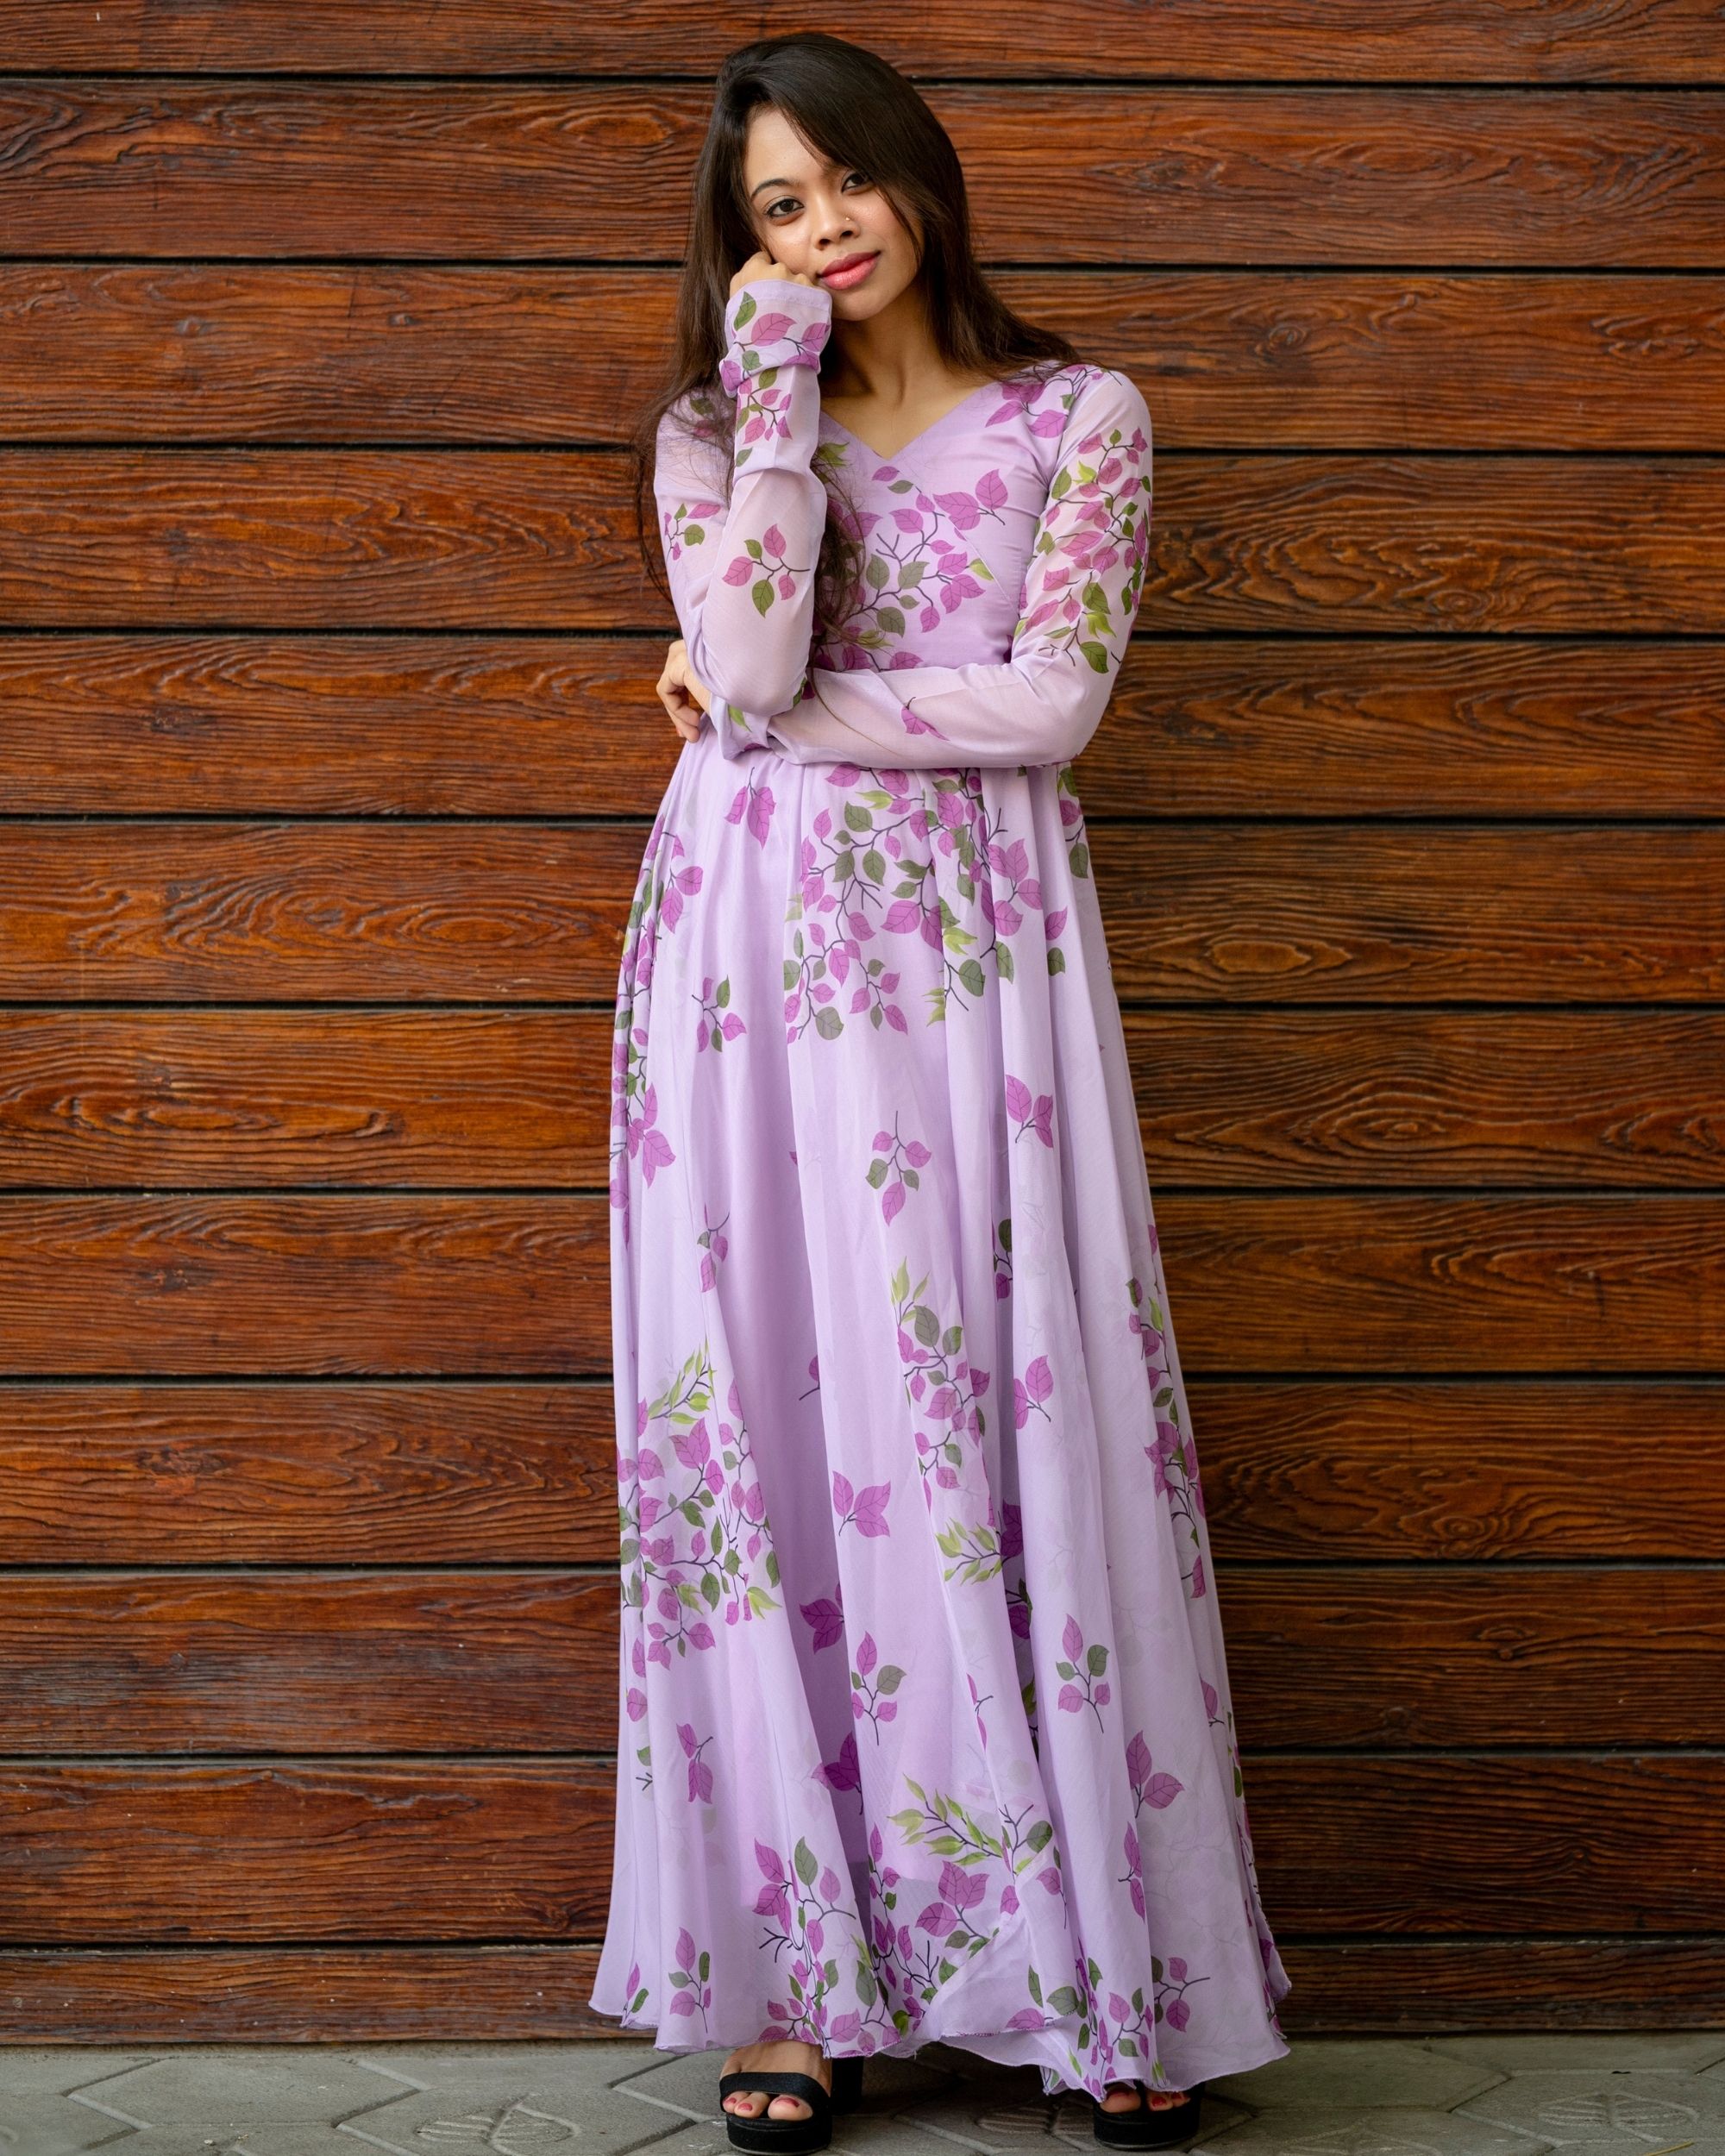 Organza Dresses - Buy Organza Dresses Online Starting at Just ₹265 | Meesho